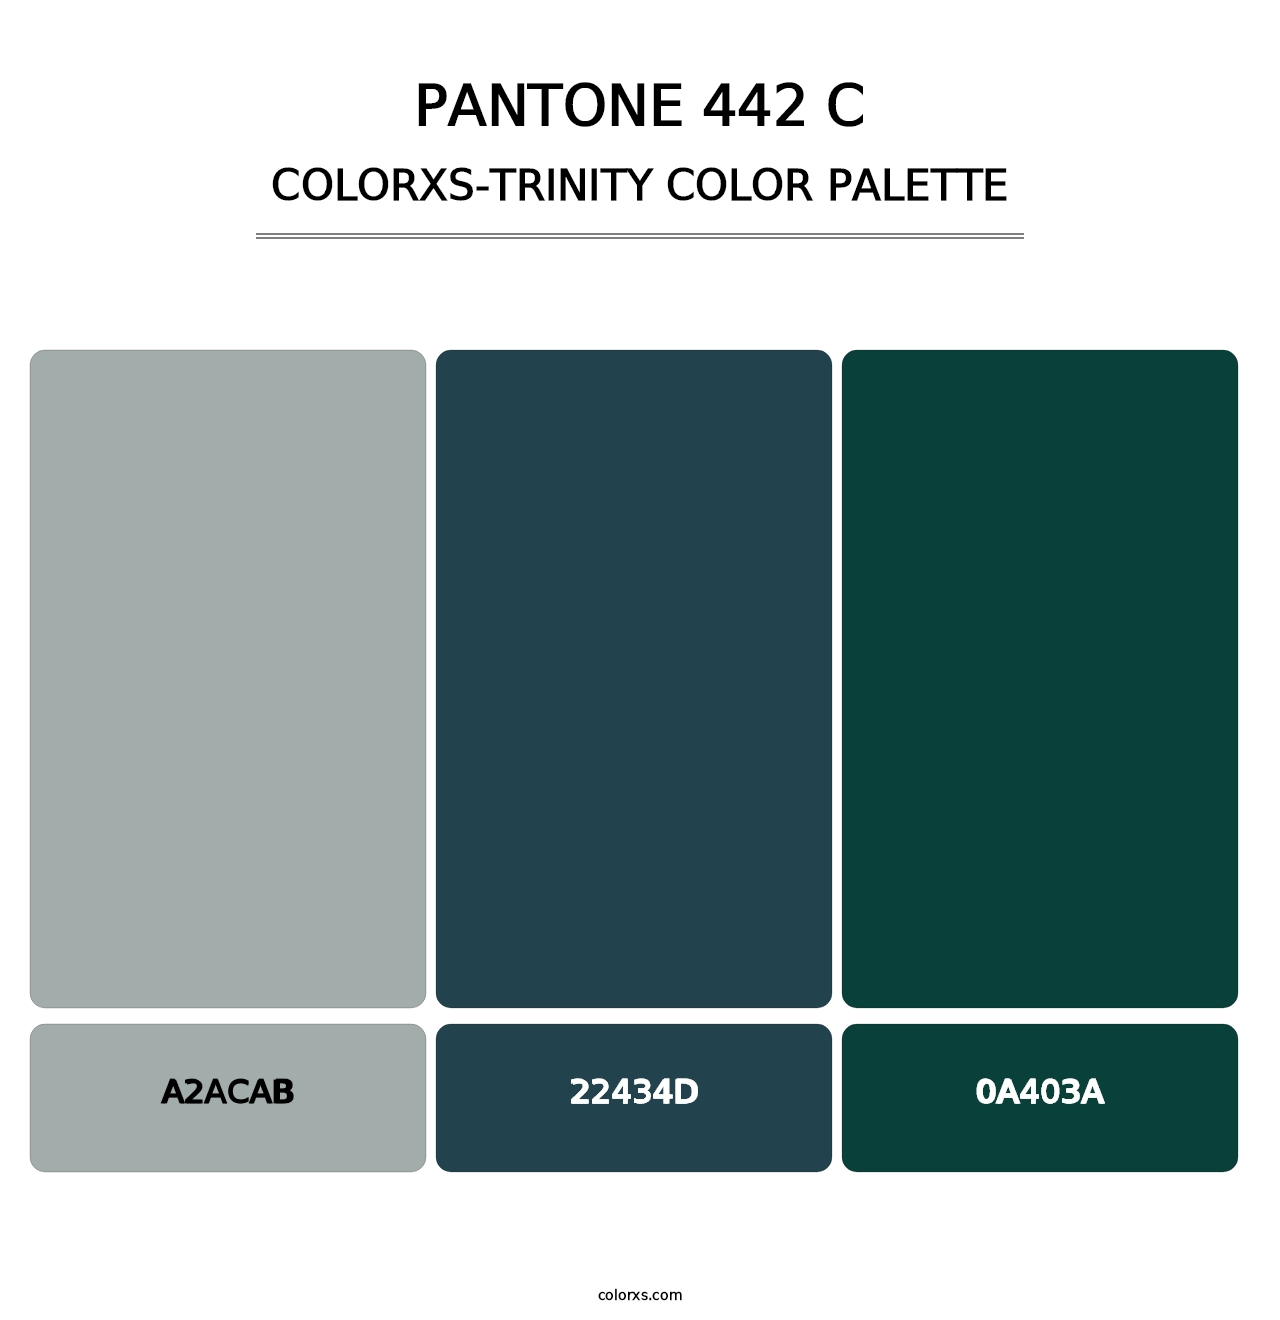 PANTONE 442 C - Colorxs Trinity Palette